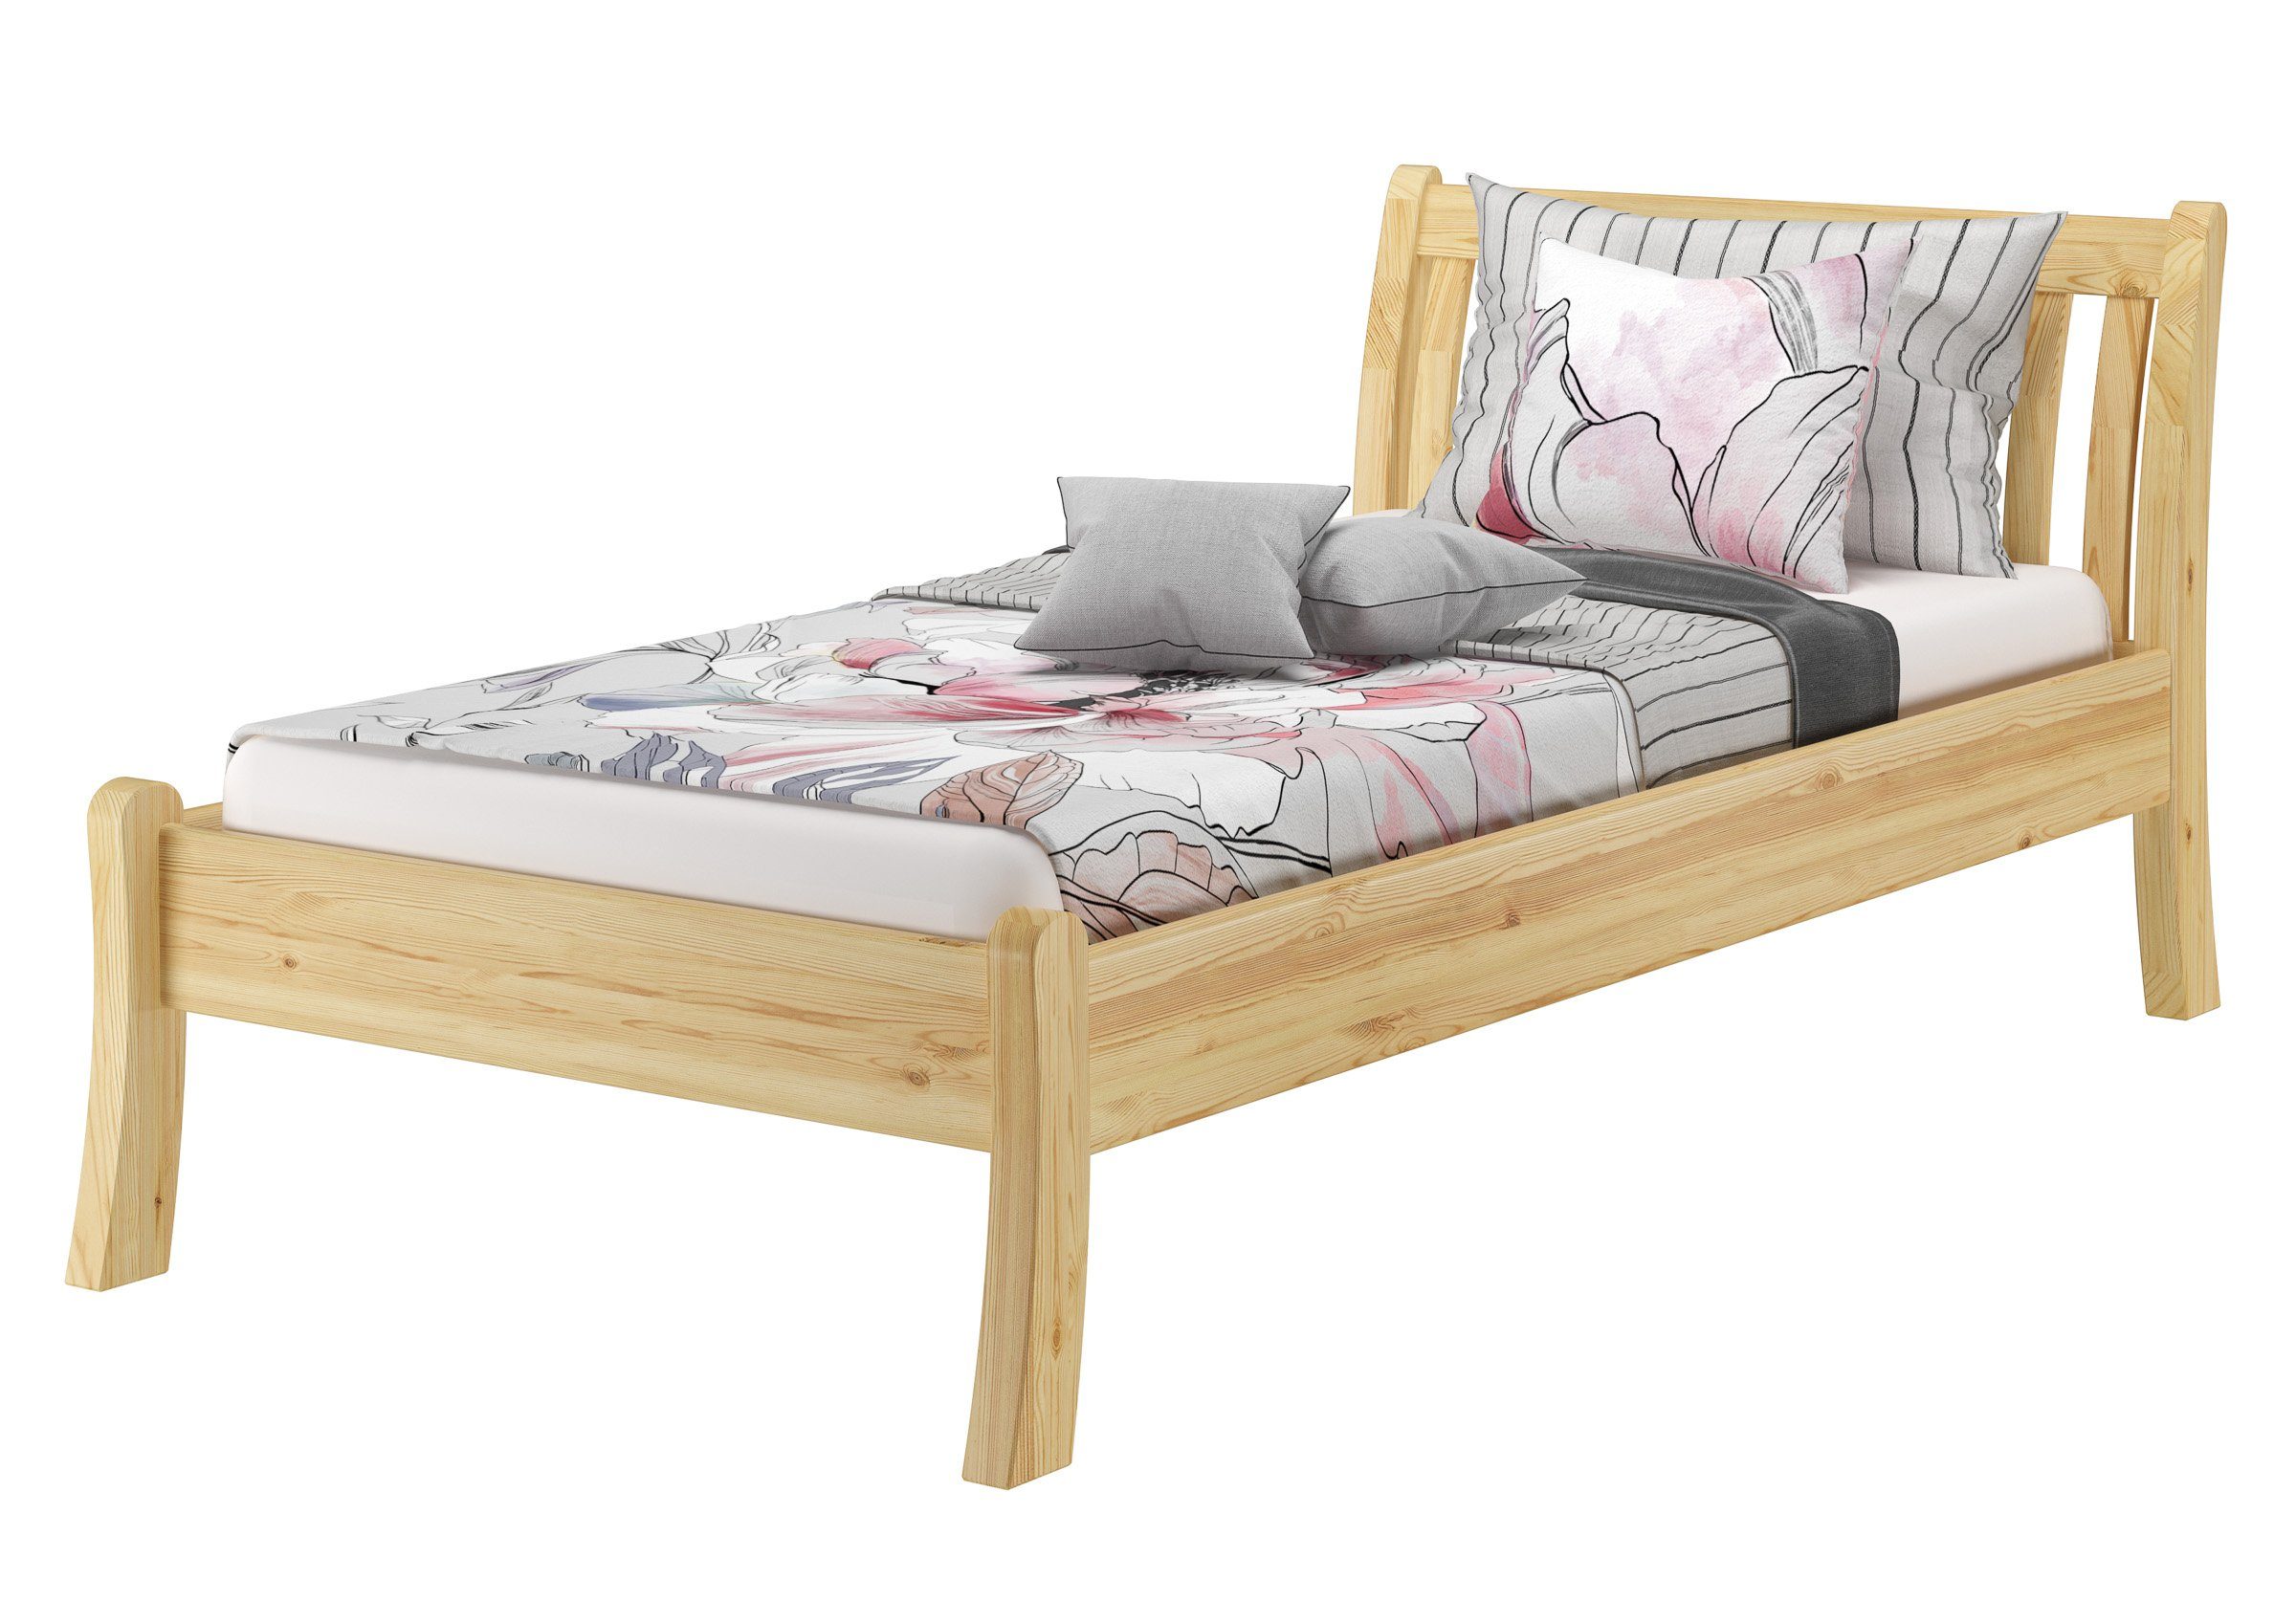 ERST-HOLZ Bett Holzbett hohe Sitzkante Kiefer massiv 100x200 cm, Kieferfarblos lackiert